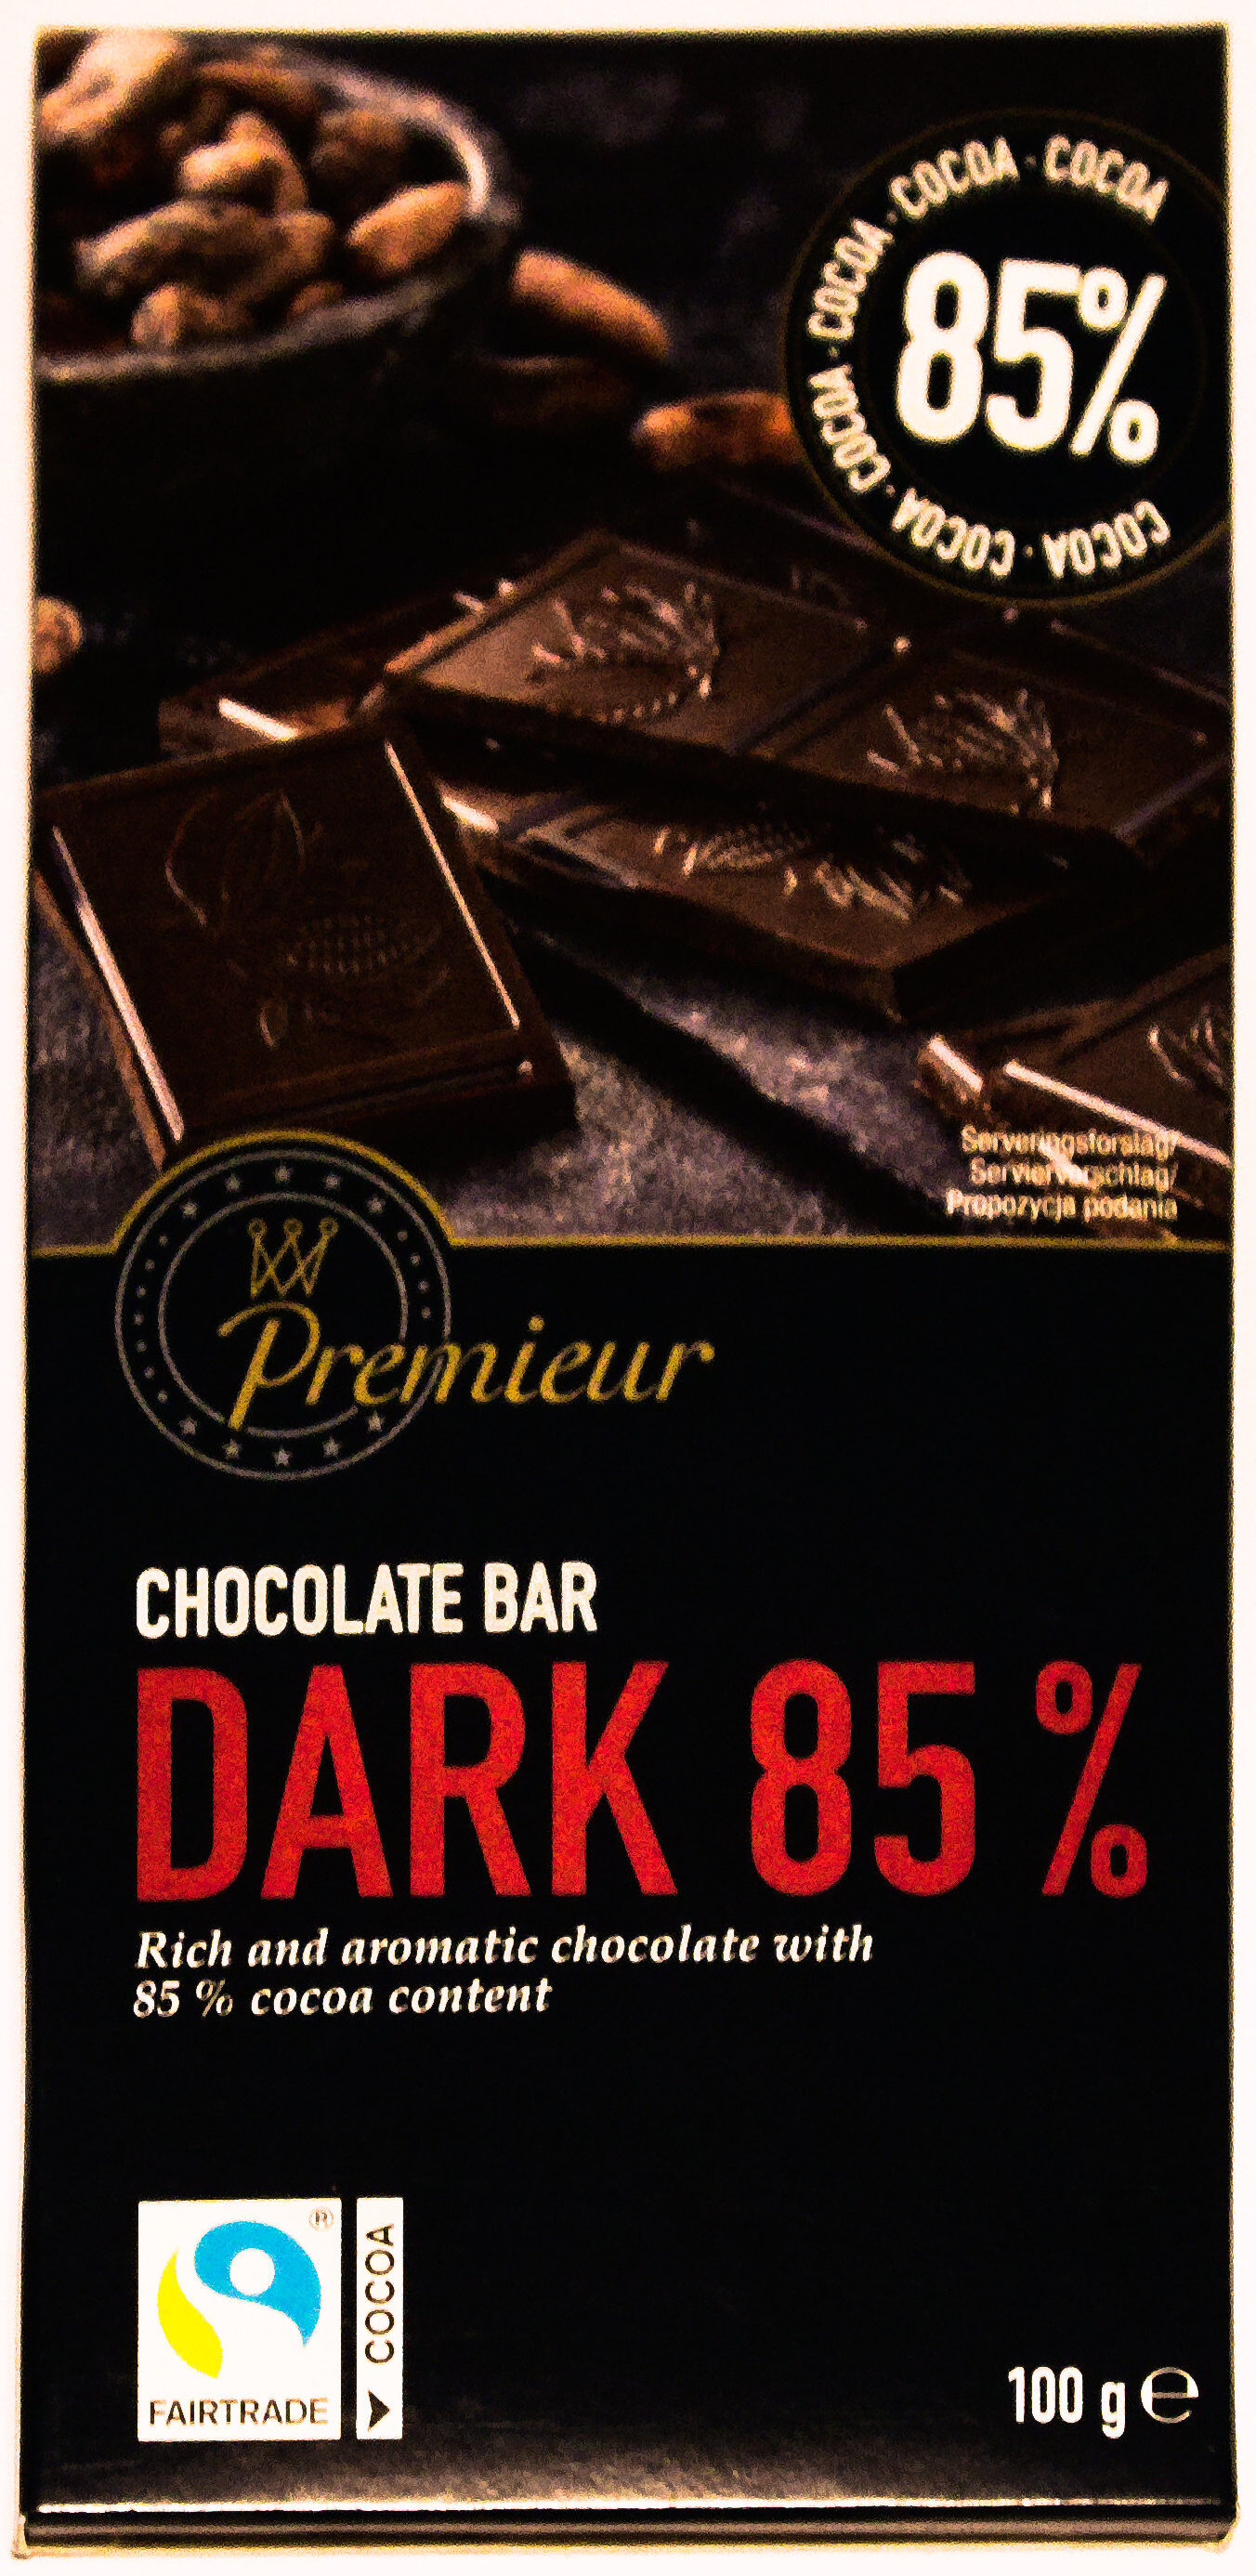 Chocolate bar  Dark 85% - Product